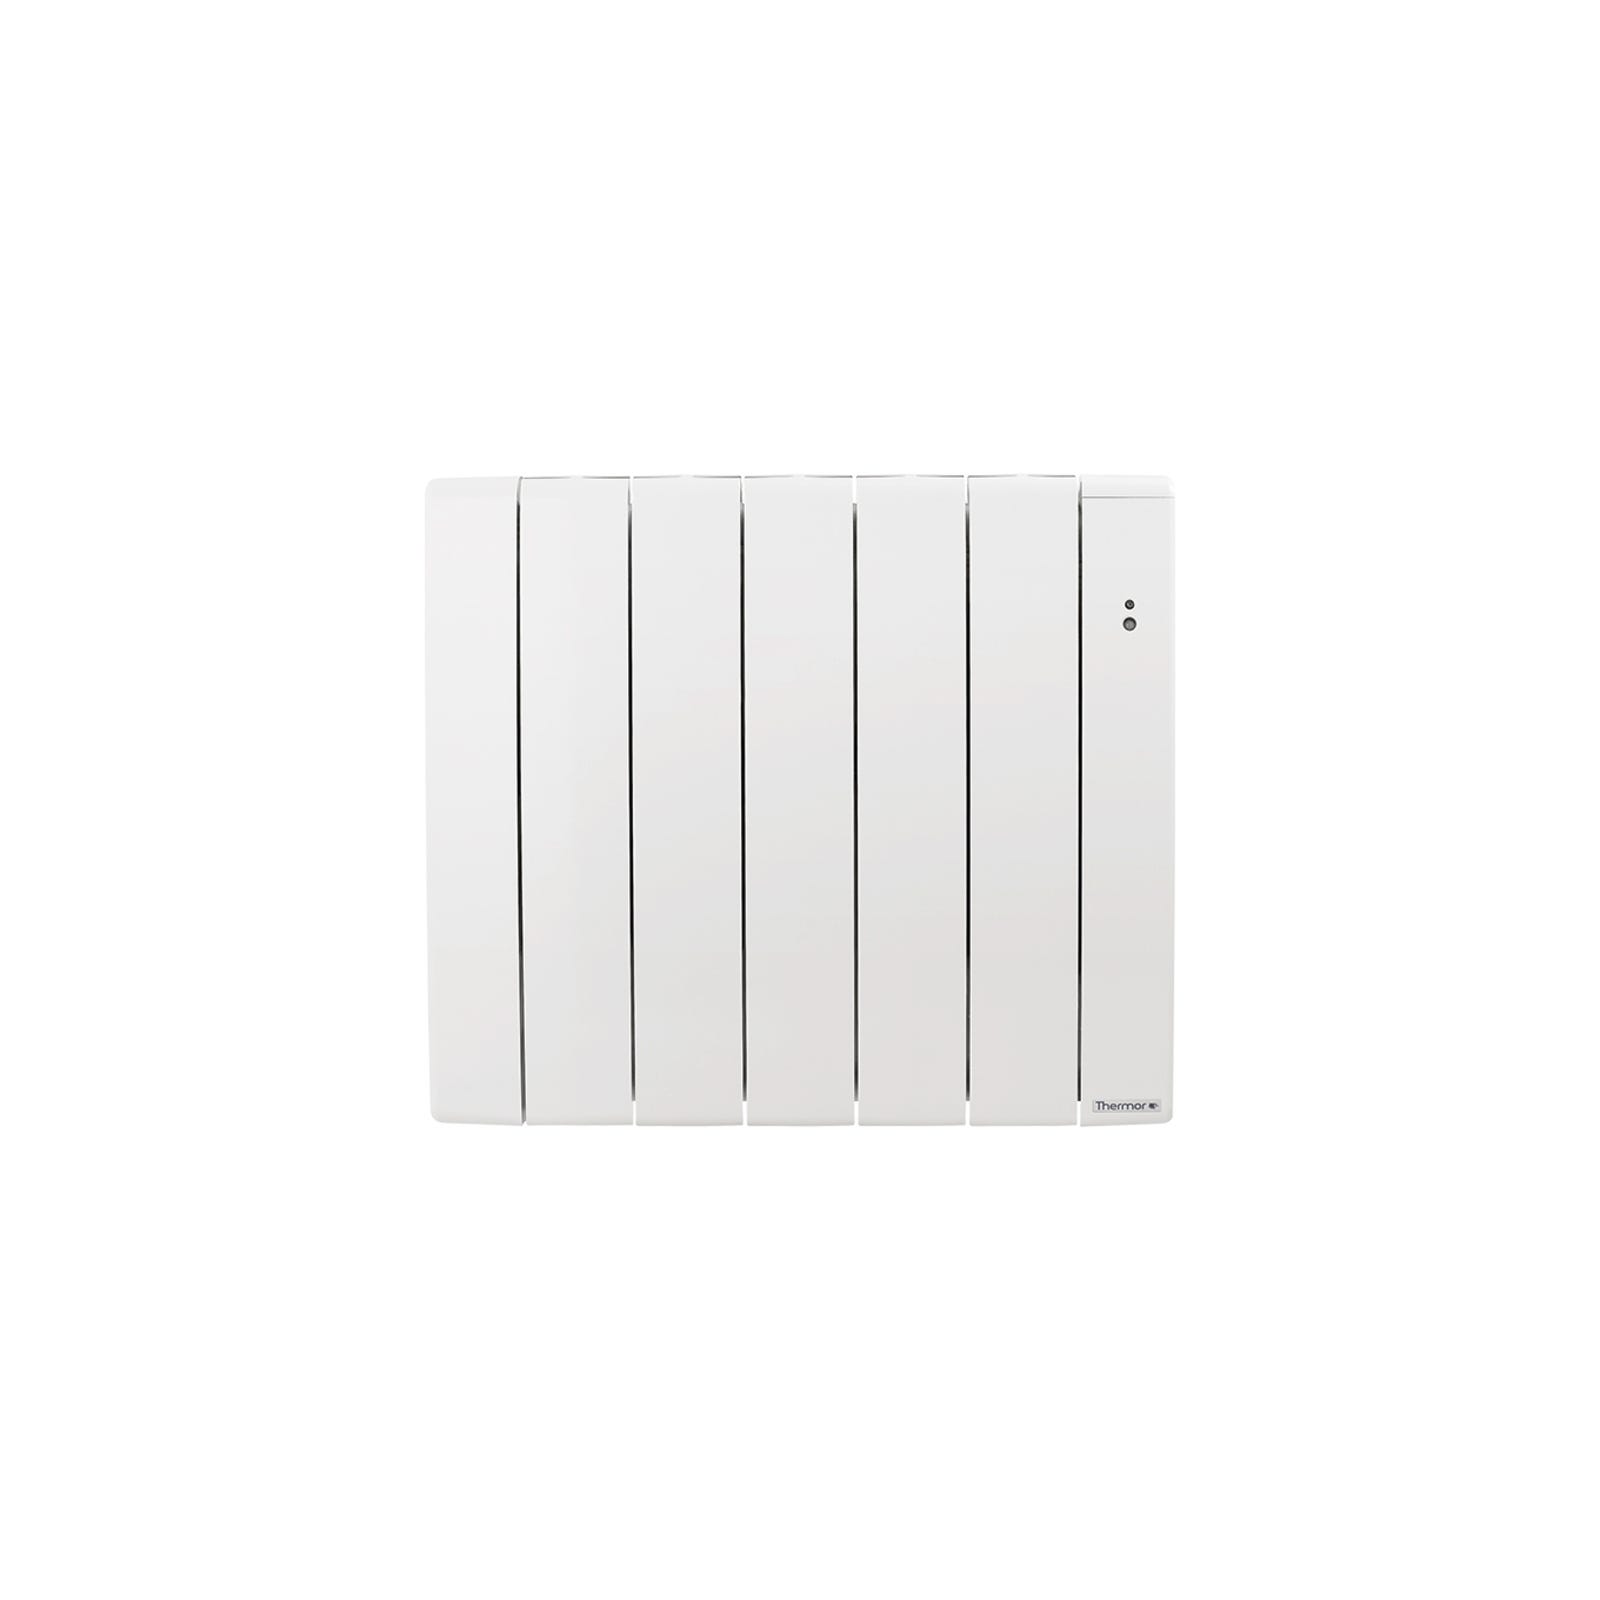 Radiateur Chaleur douce Bilbao 3 horizontal blanc 750W - 493821 - THERMOR 0